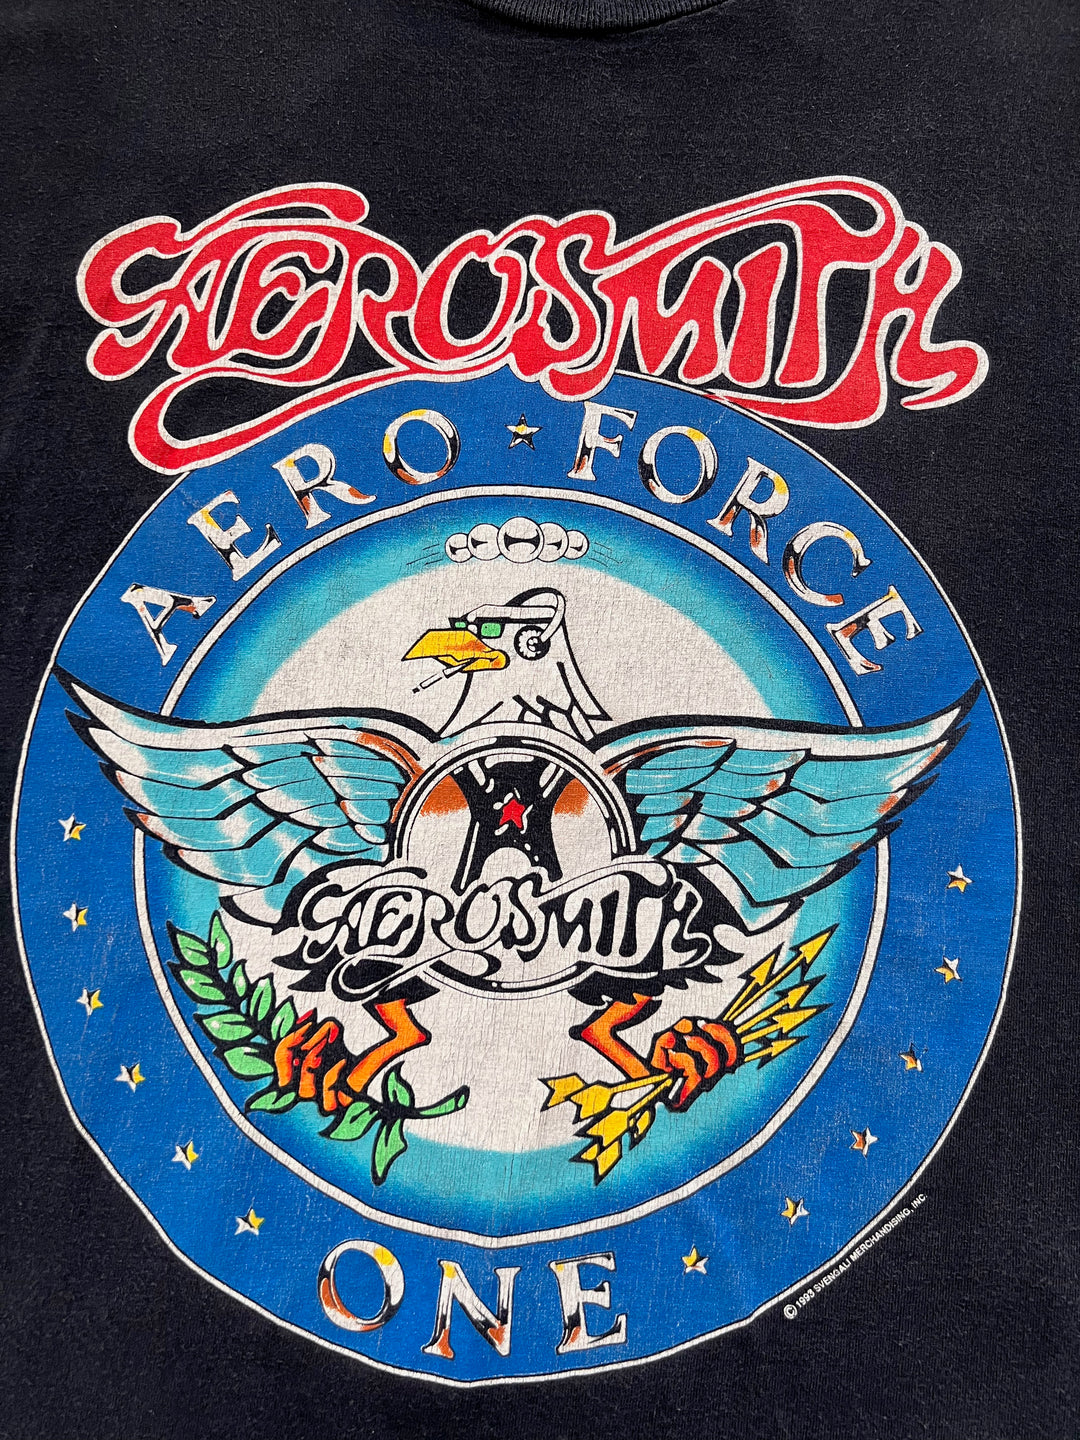 Vintage 1993 Aerosmith Tour T-shirt. XL